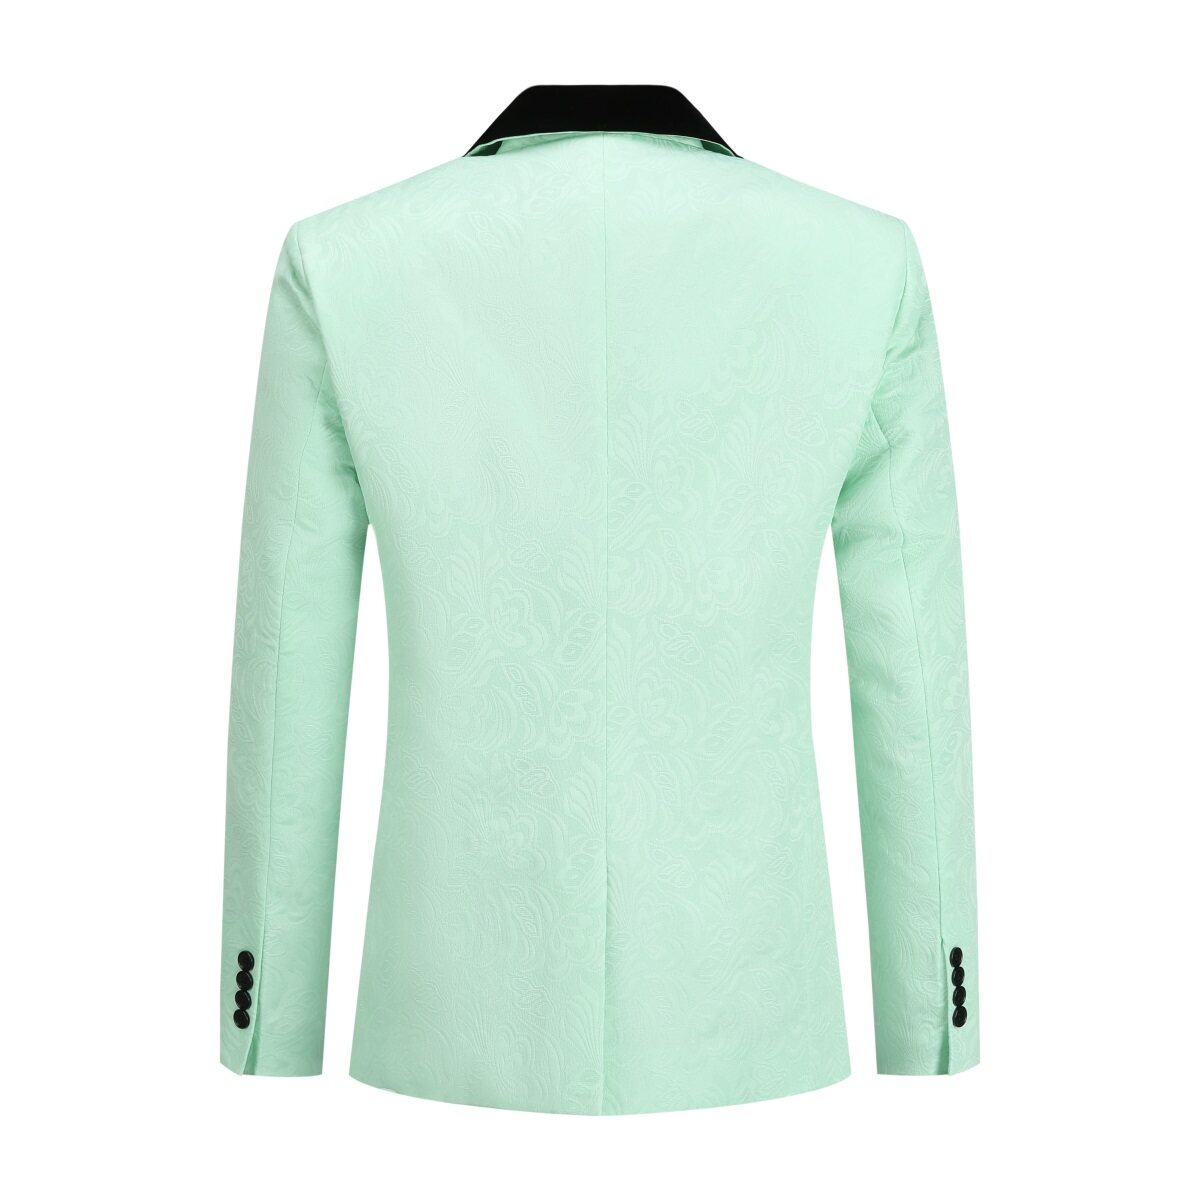 3-Piece Paisley Suit Shawl Collar Suit Mint Green